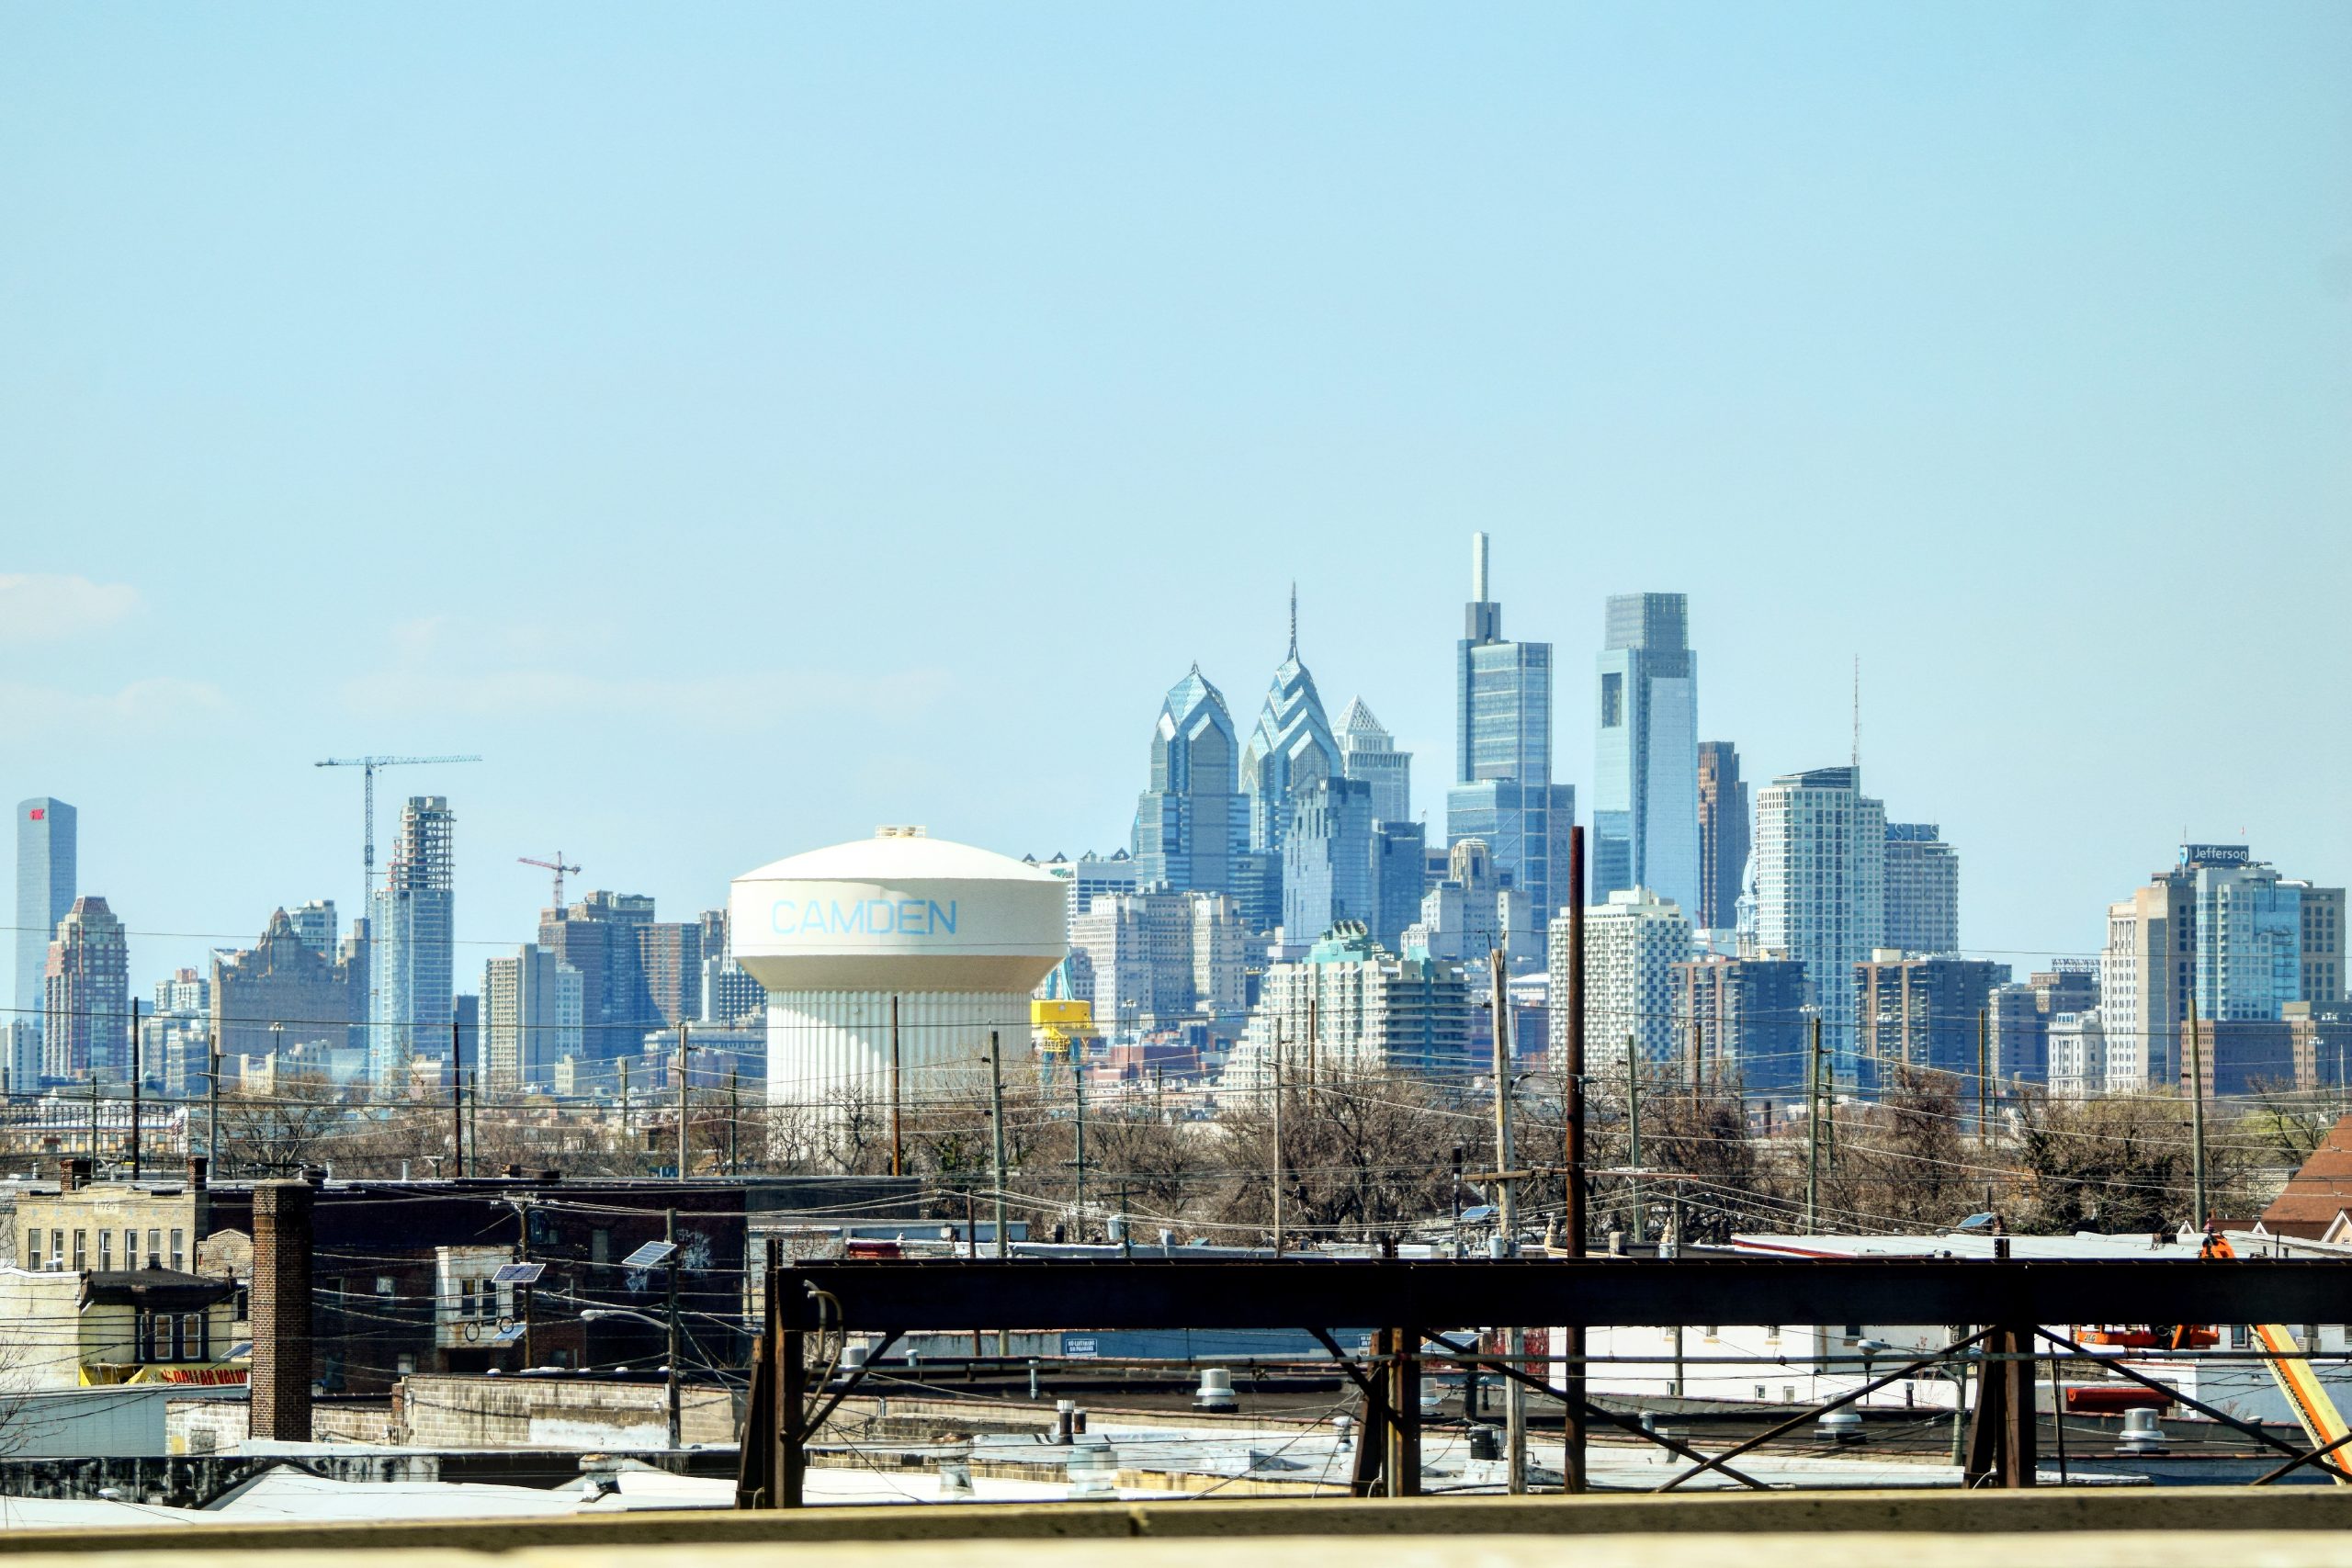 Philadelphia skyline from I-676. Photo by Thomas Koloski